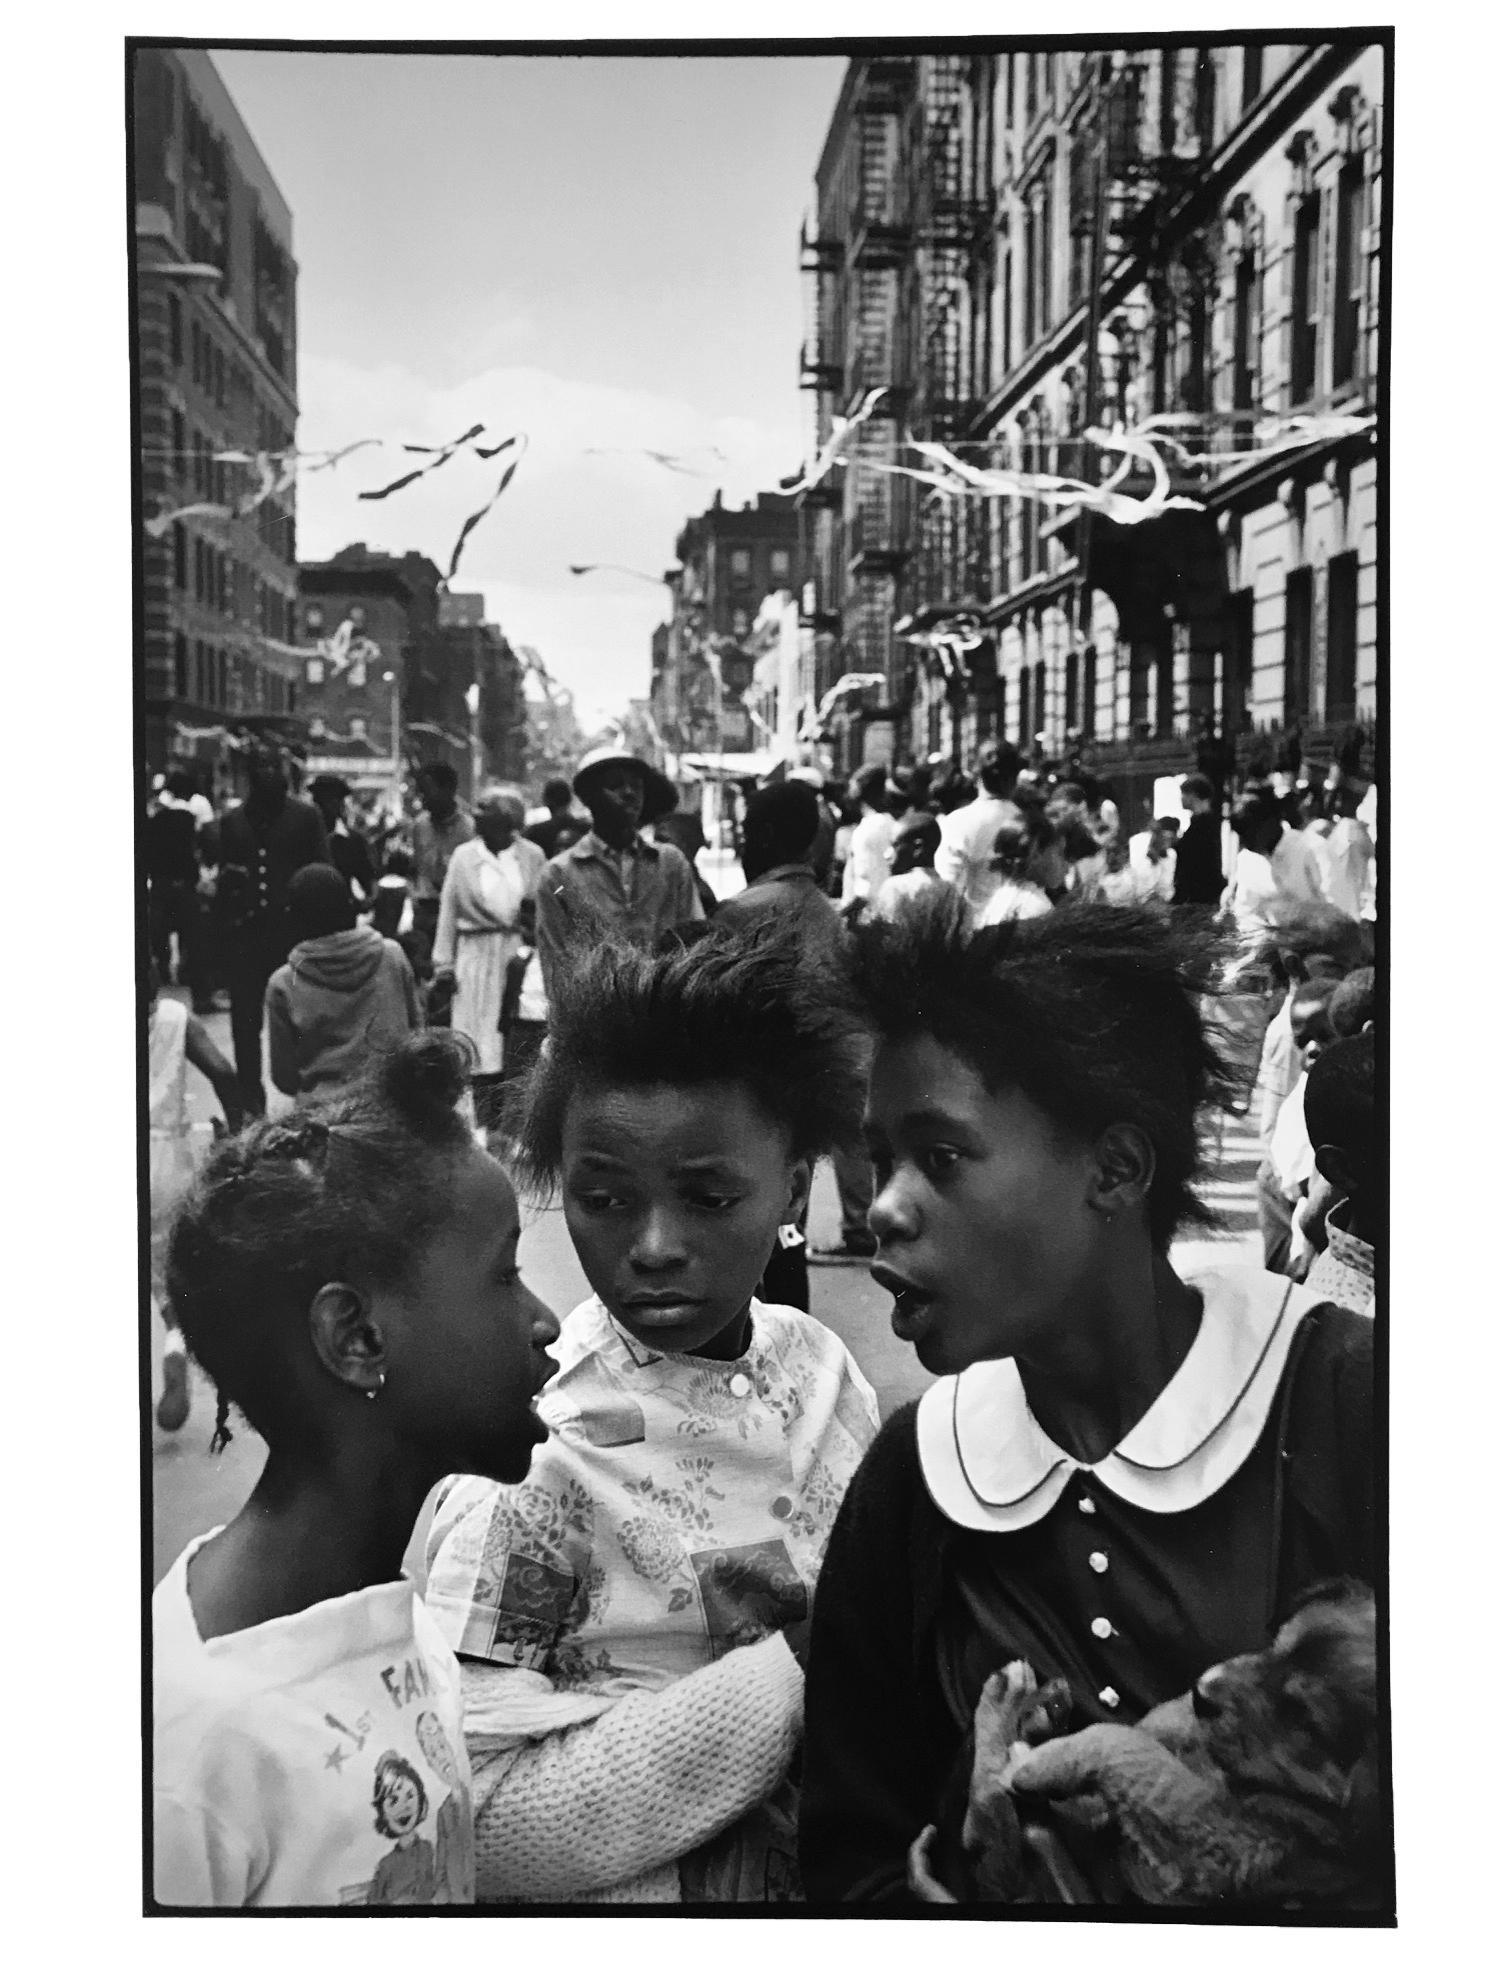 Girls in Harlem Street, Portrait Photography of African American Children 1960s